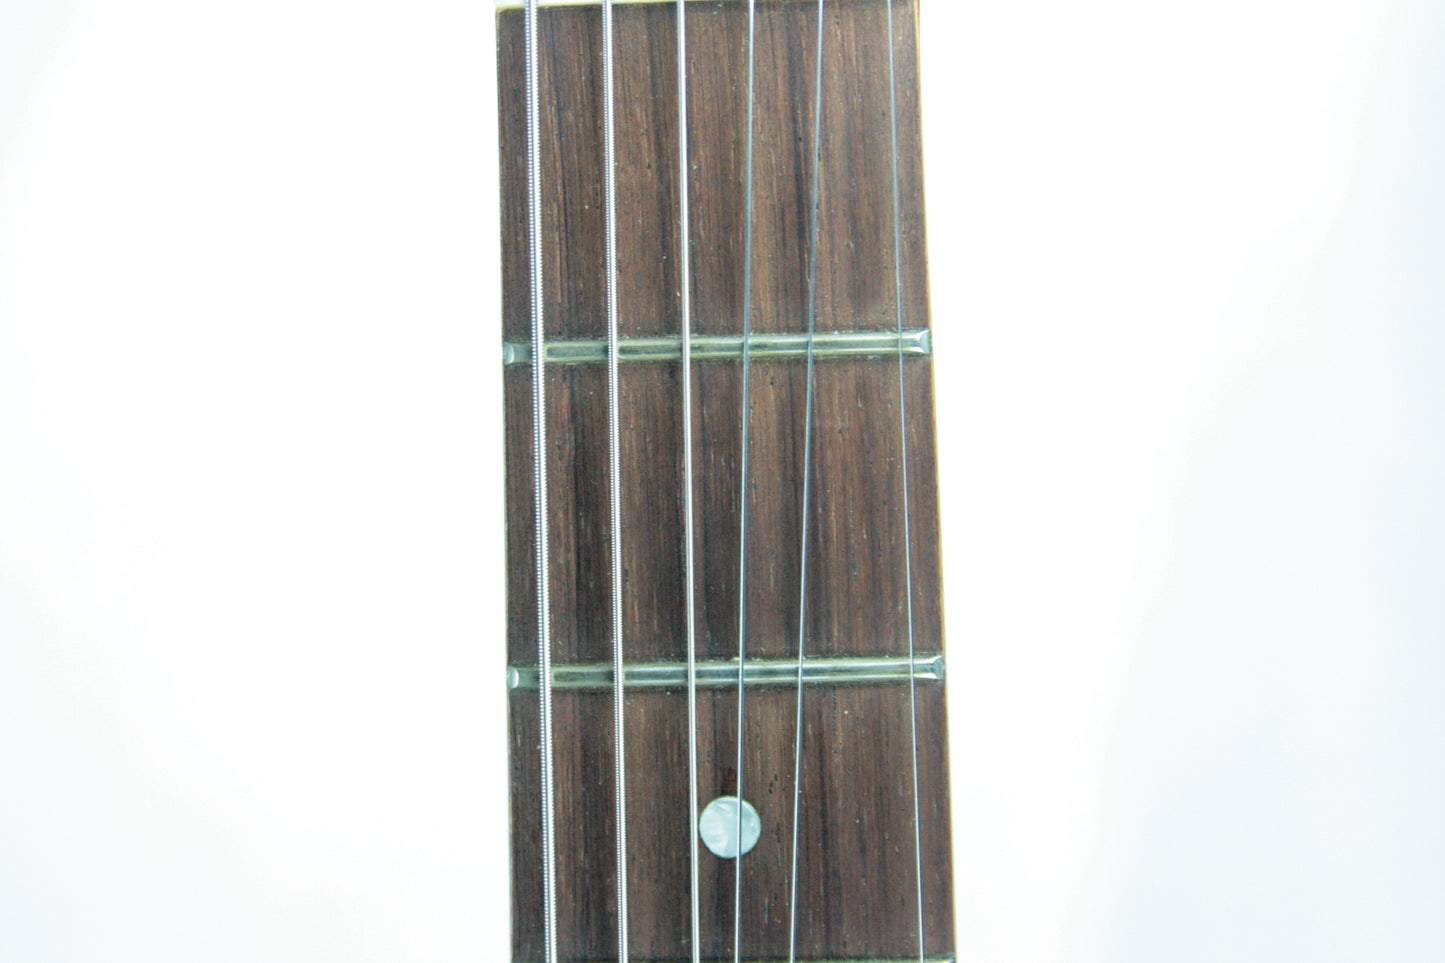 RARE 2002 Gibson 57 KORINA Les Paul Jr. Reissue! 1957 Junior Custom Shop Historic African Limba